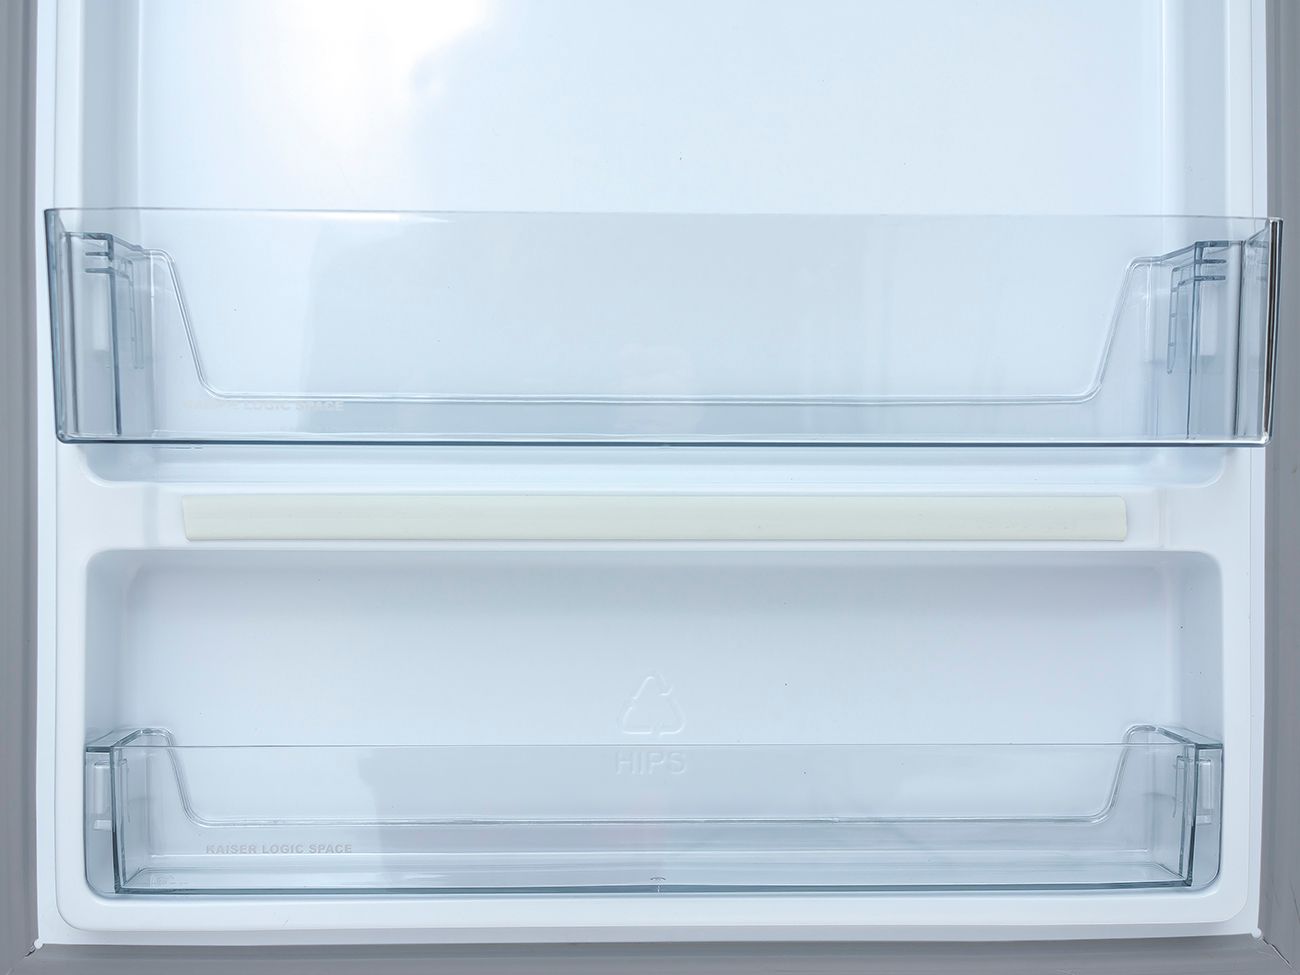 Холодильник KAISER KK 65205 S